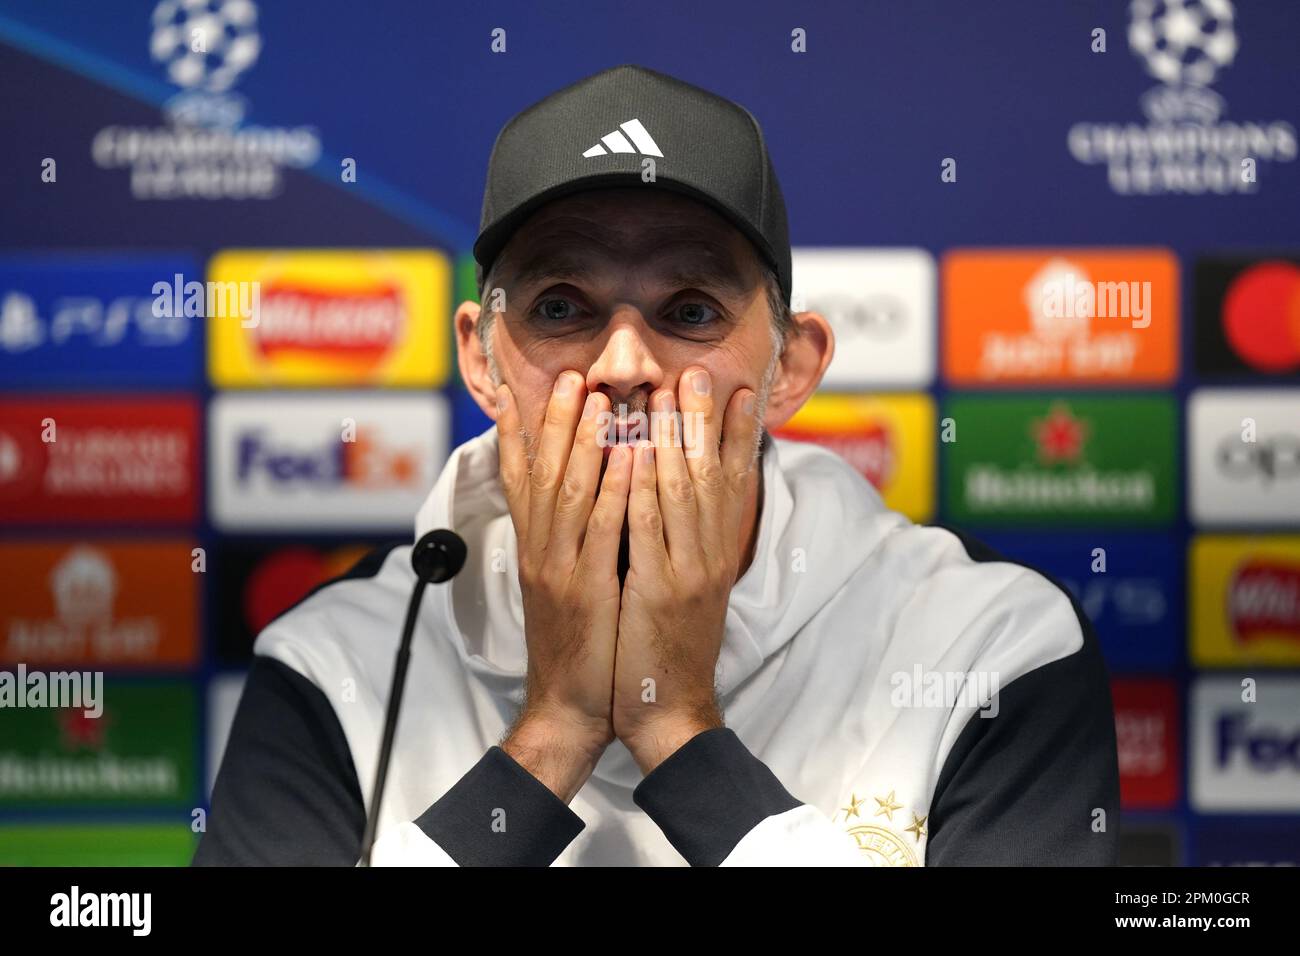 Bayern Munich head coach Thomas Tuchel during a press conference at the